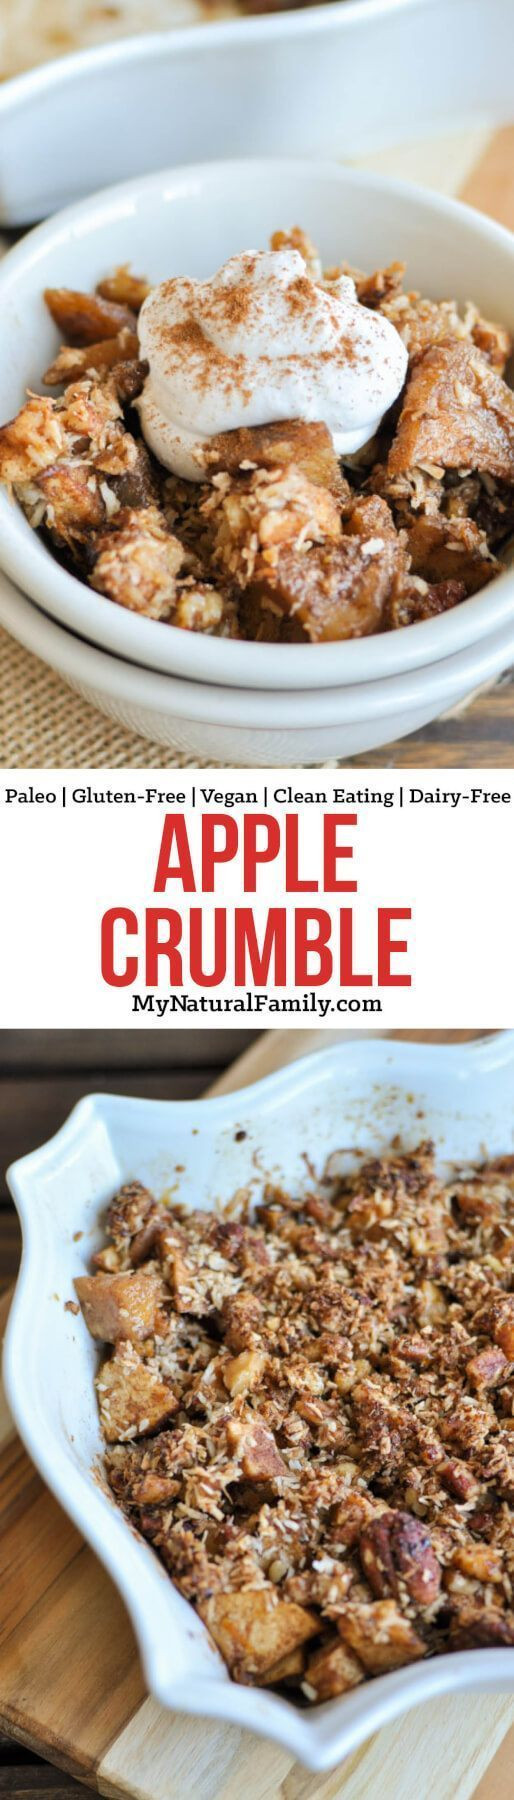 Paleo Apple Recipes
 Paleo Apple Crumble Recipe